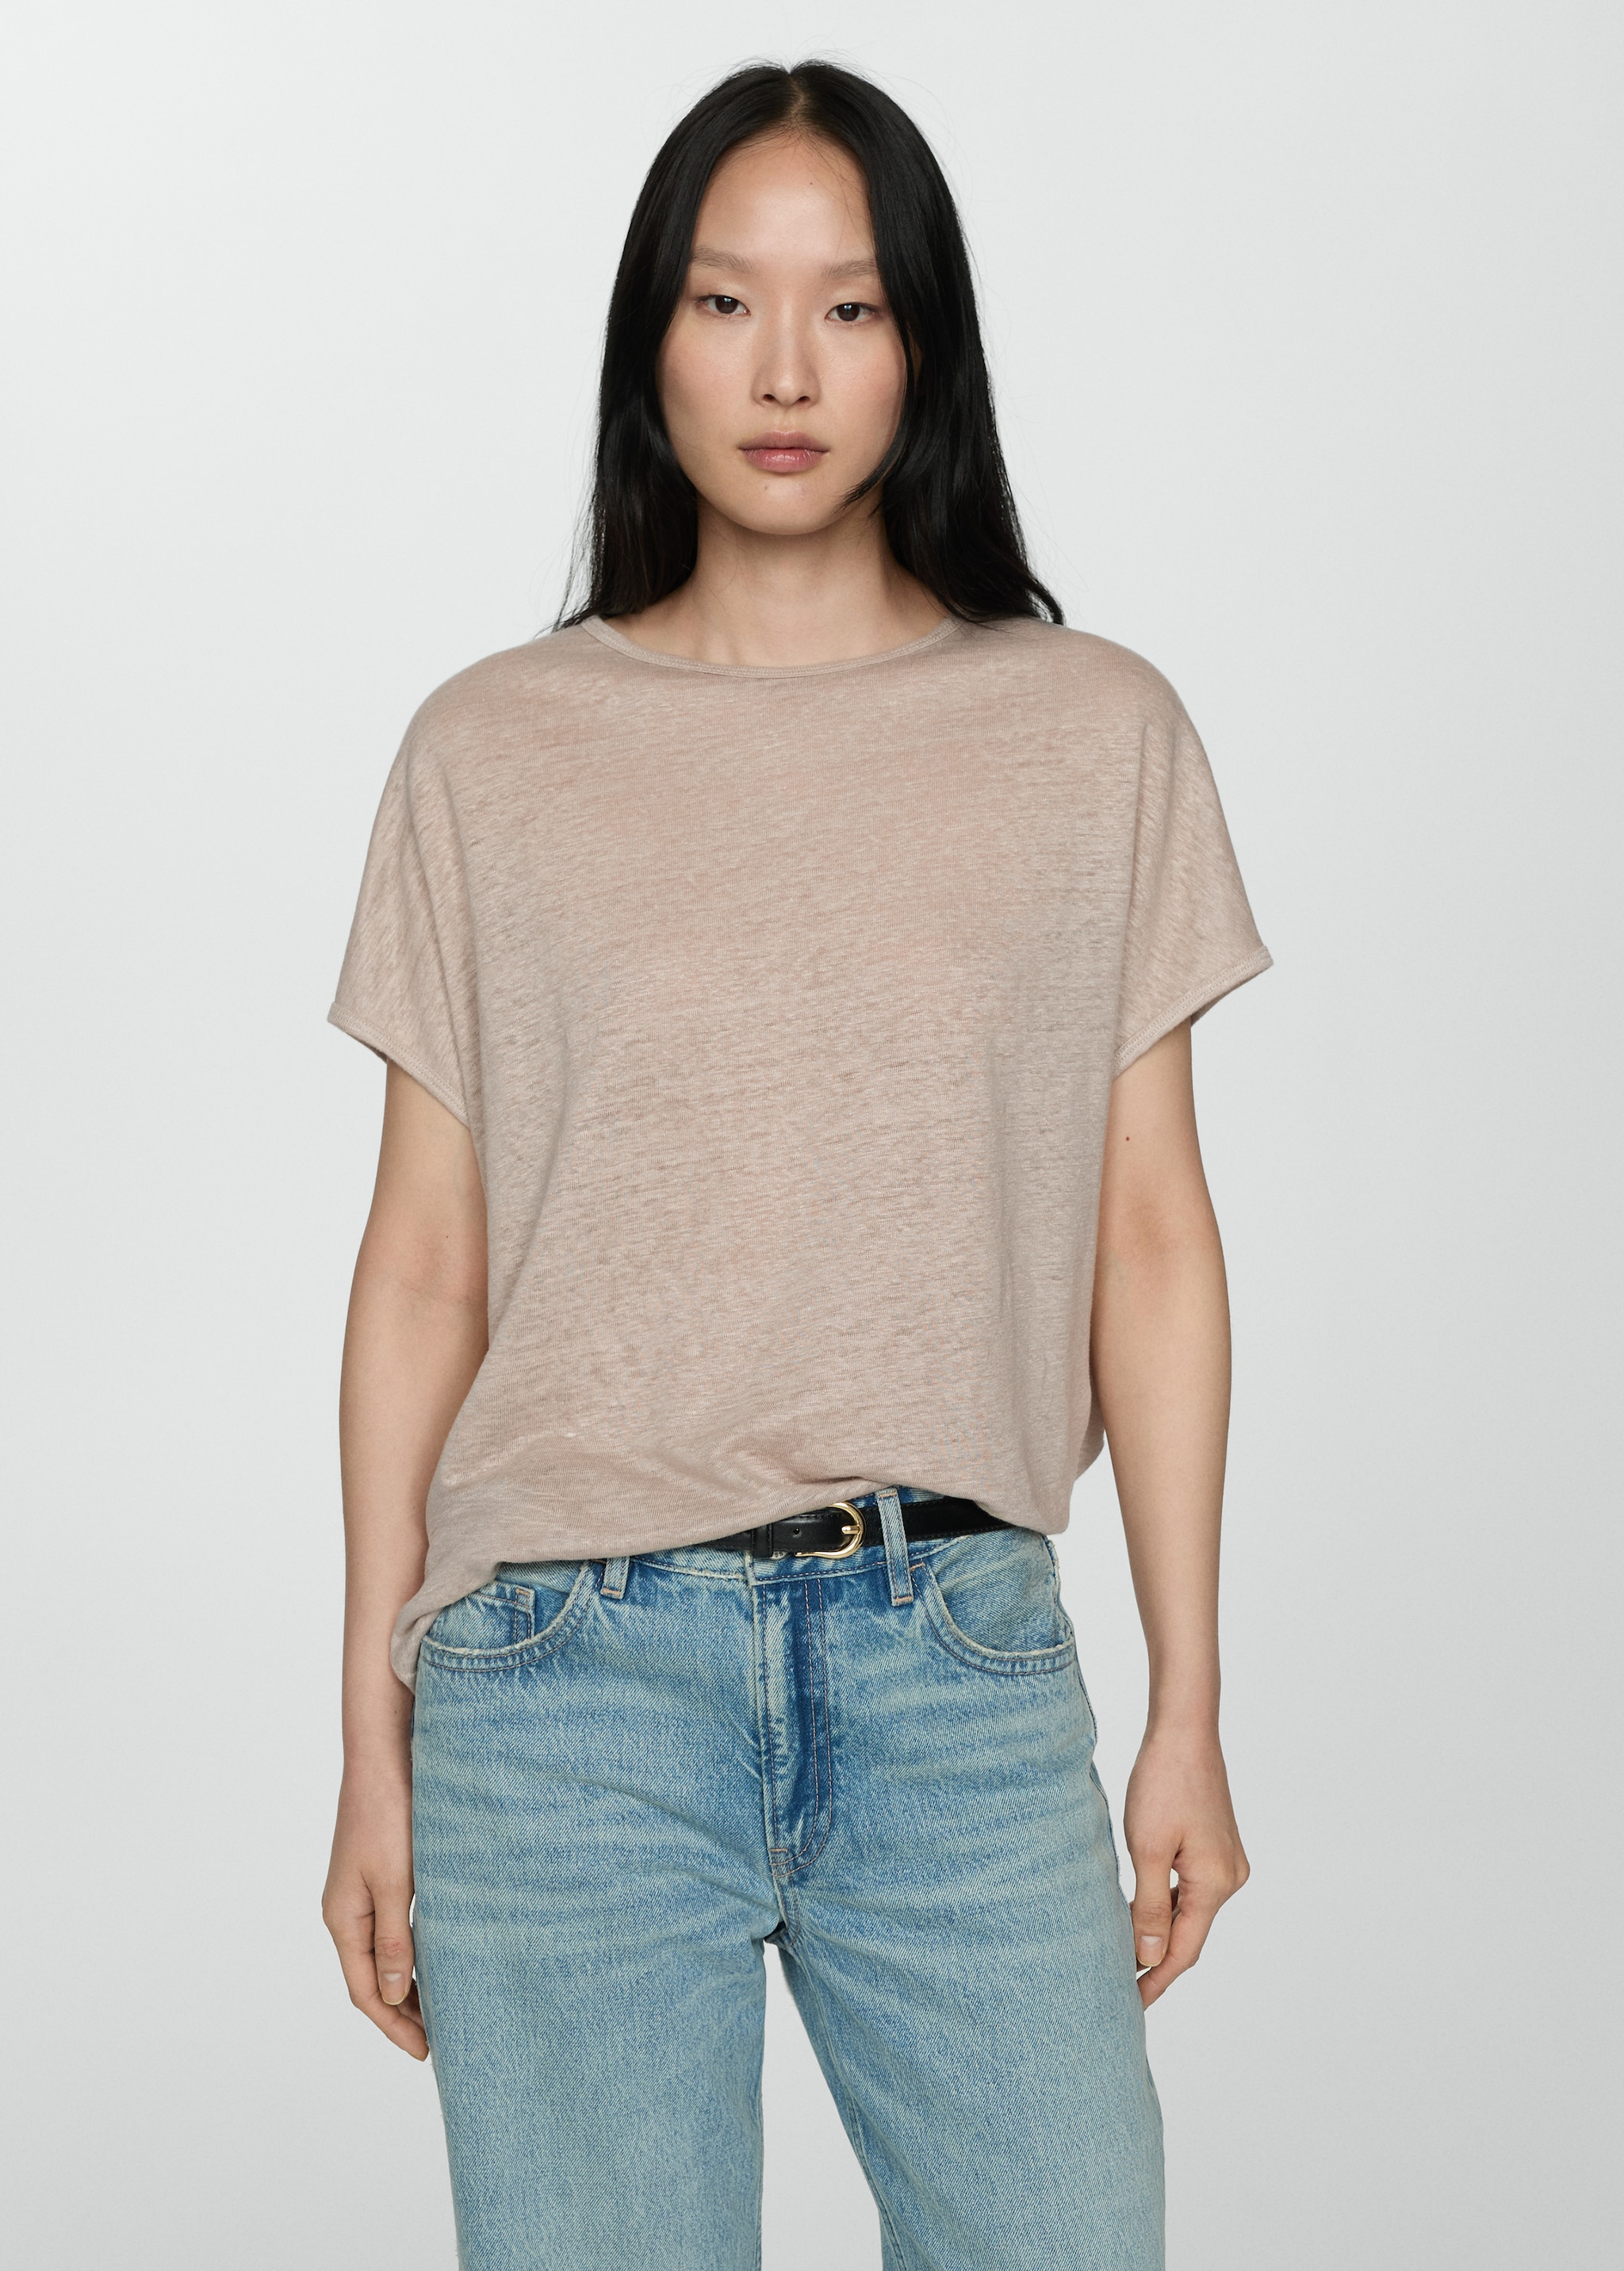 Camiseta lino manga corta - Plano medio